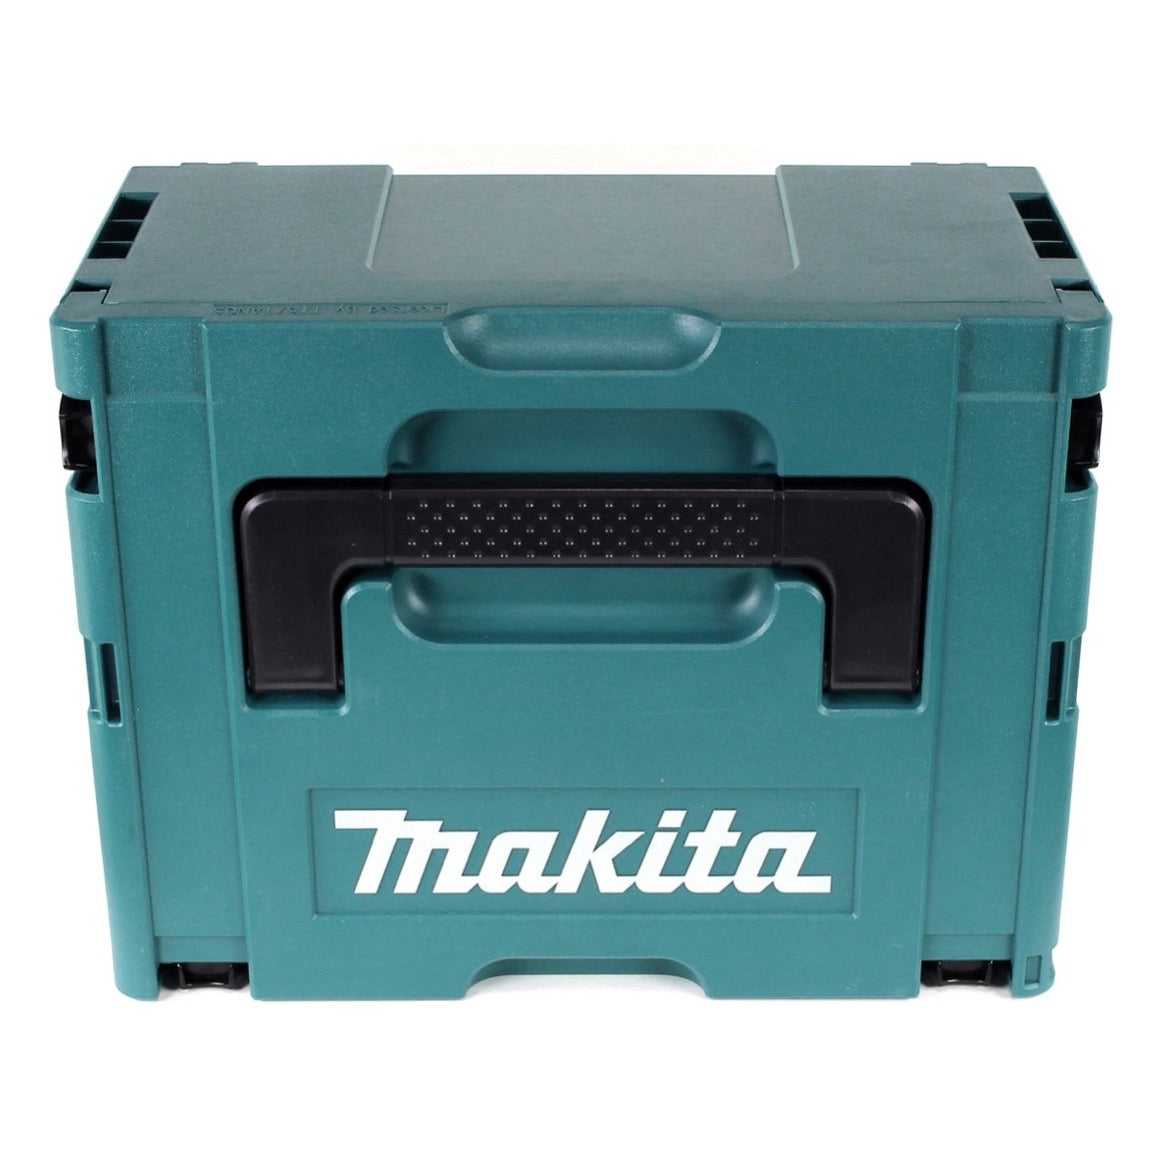 Makita DCS 553 RTJ Akku Metallhandkreissäge 18V 150 mm Brushless + 2x Akku 5,0Ah + Ladegerät + Makpac